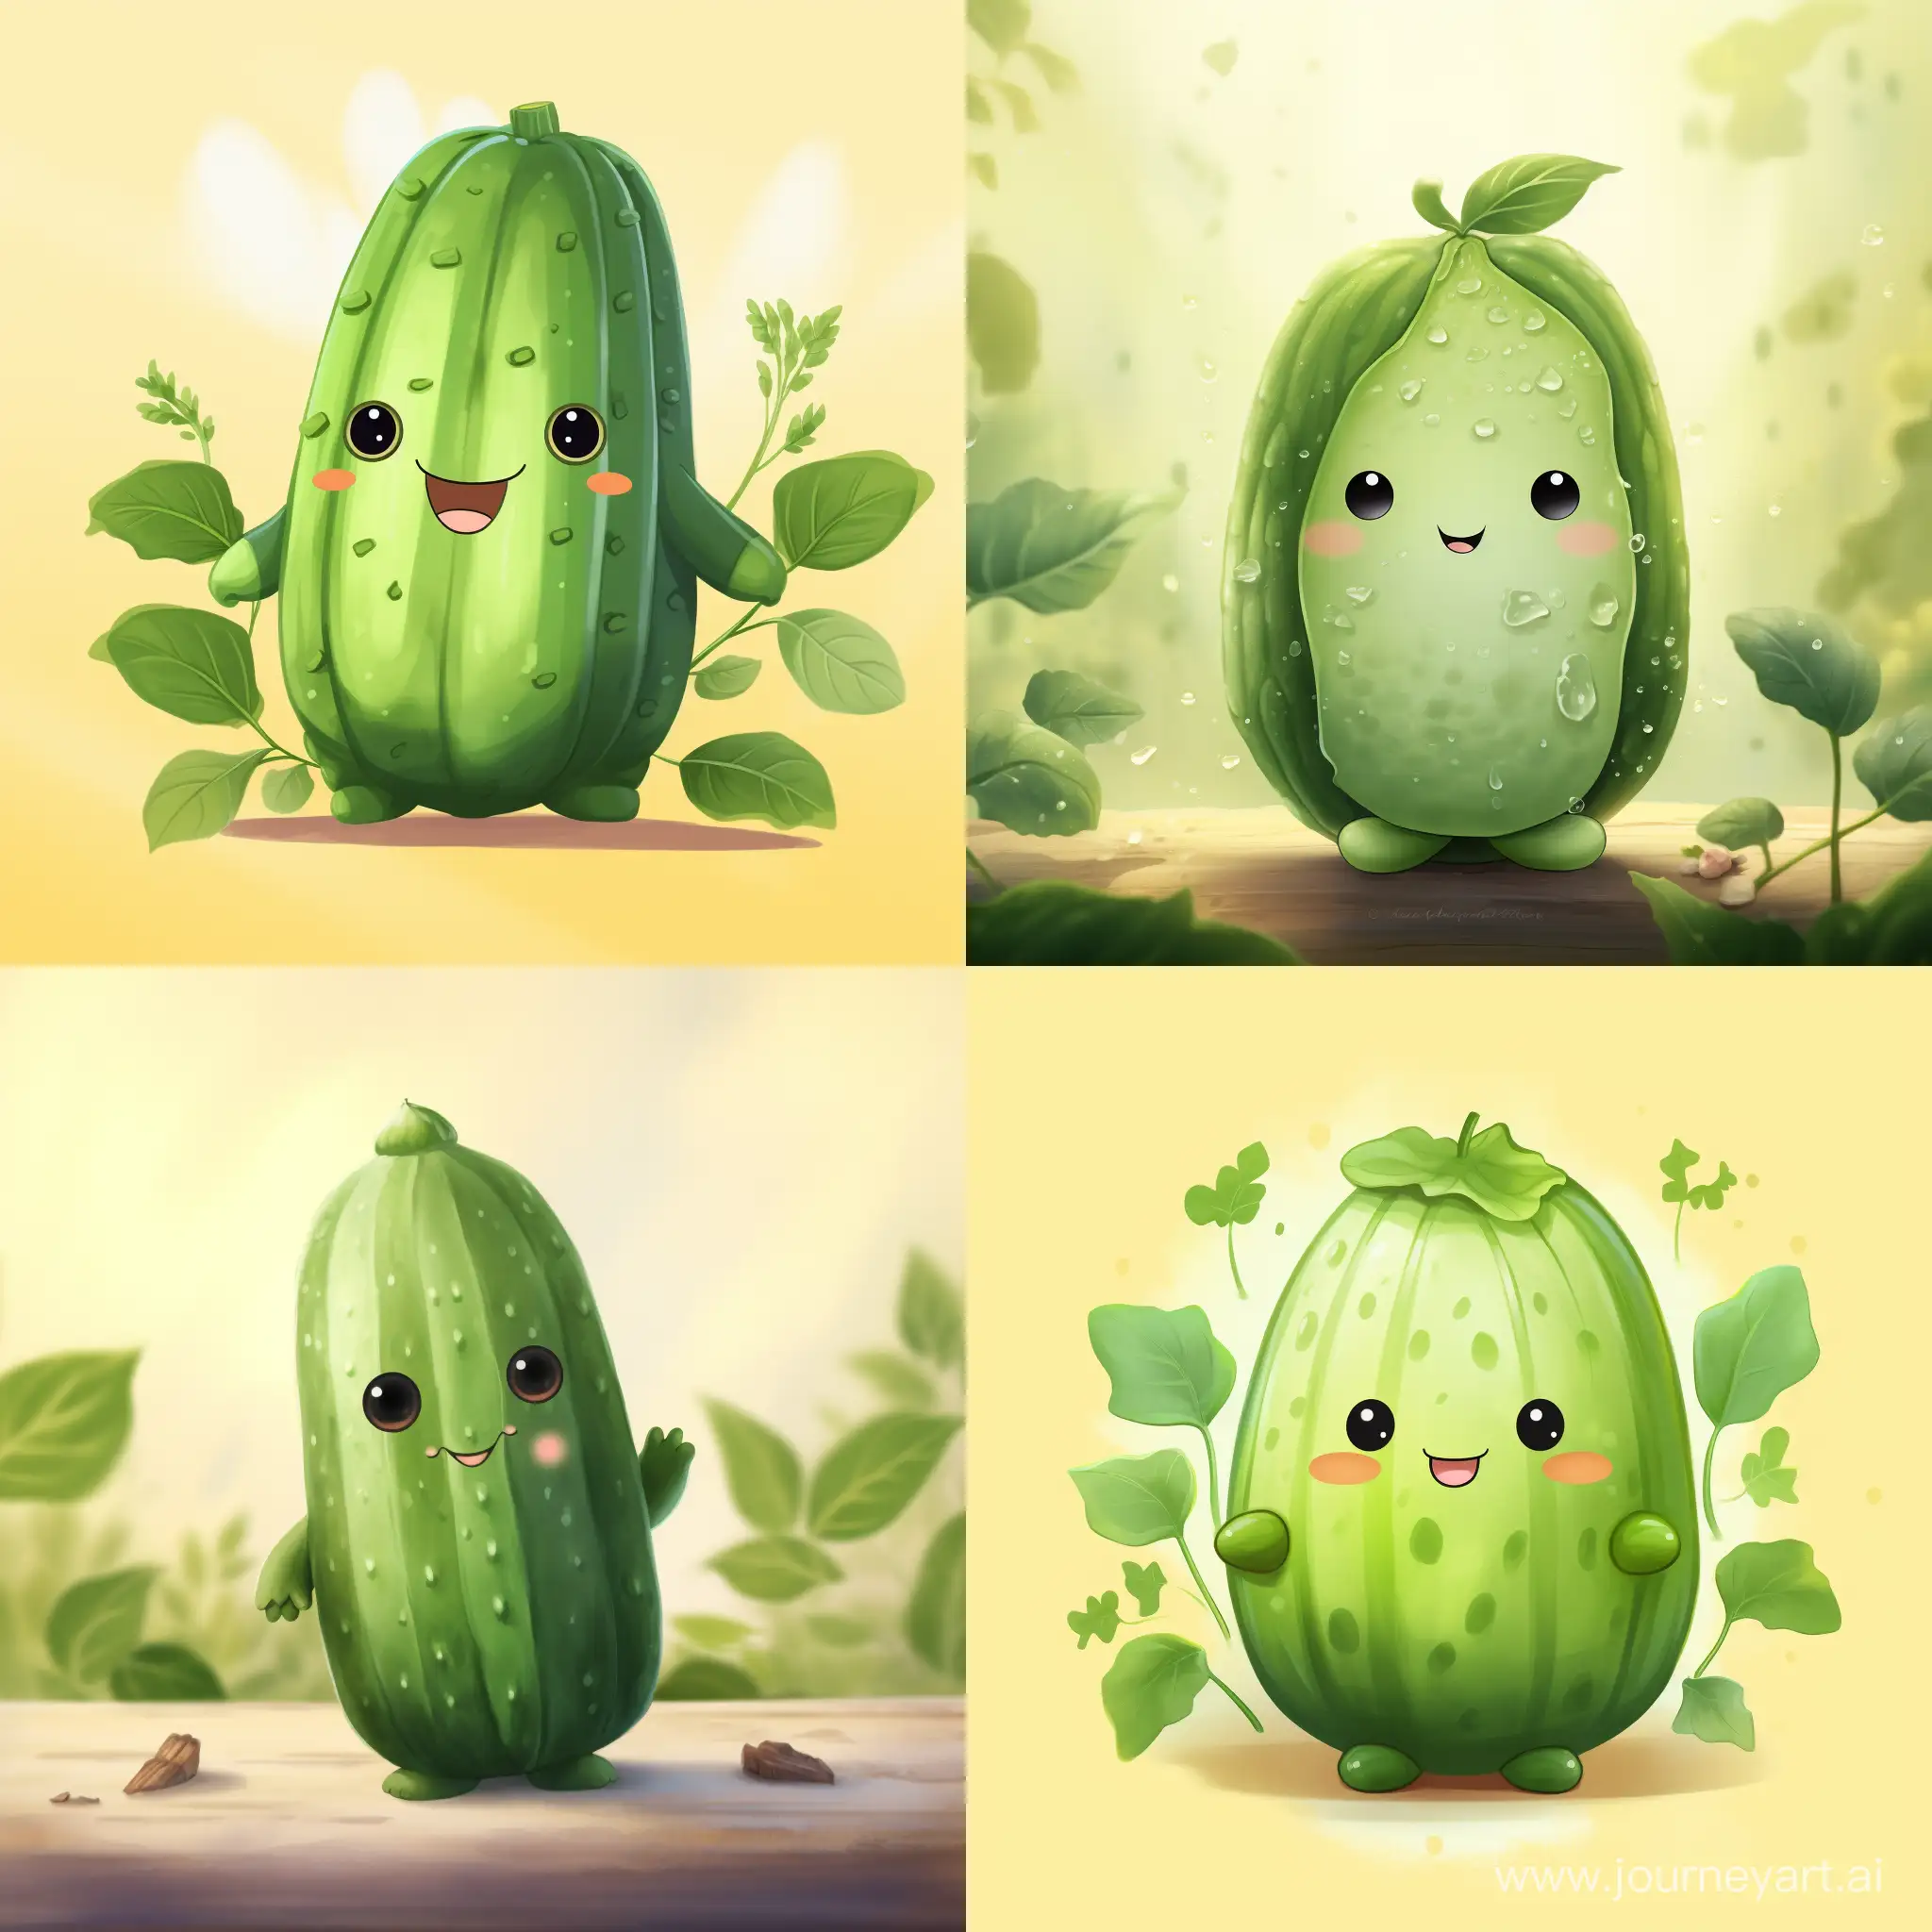 Adorable-11-Aspect-Ratio-Cucumber-Art-Vibrant-and-Playful-Vegetable-Illustration